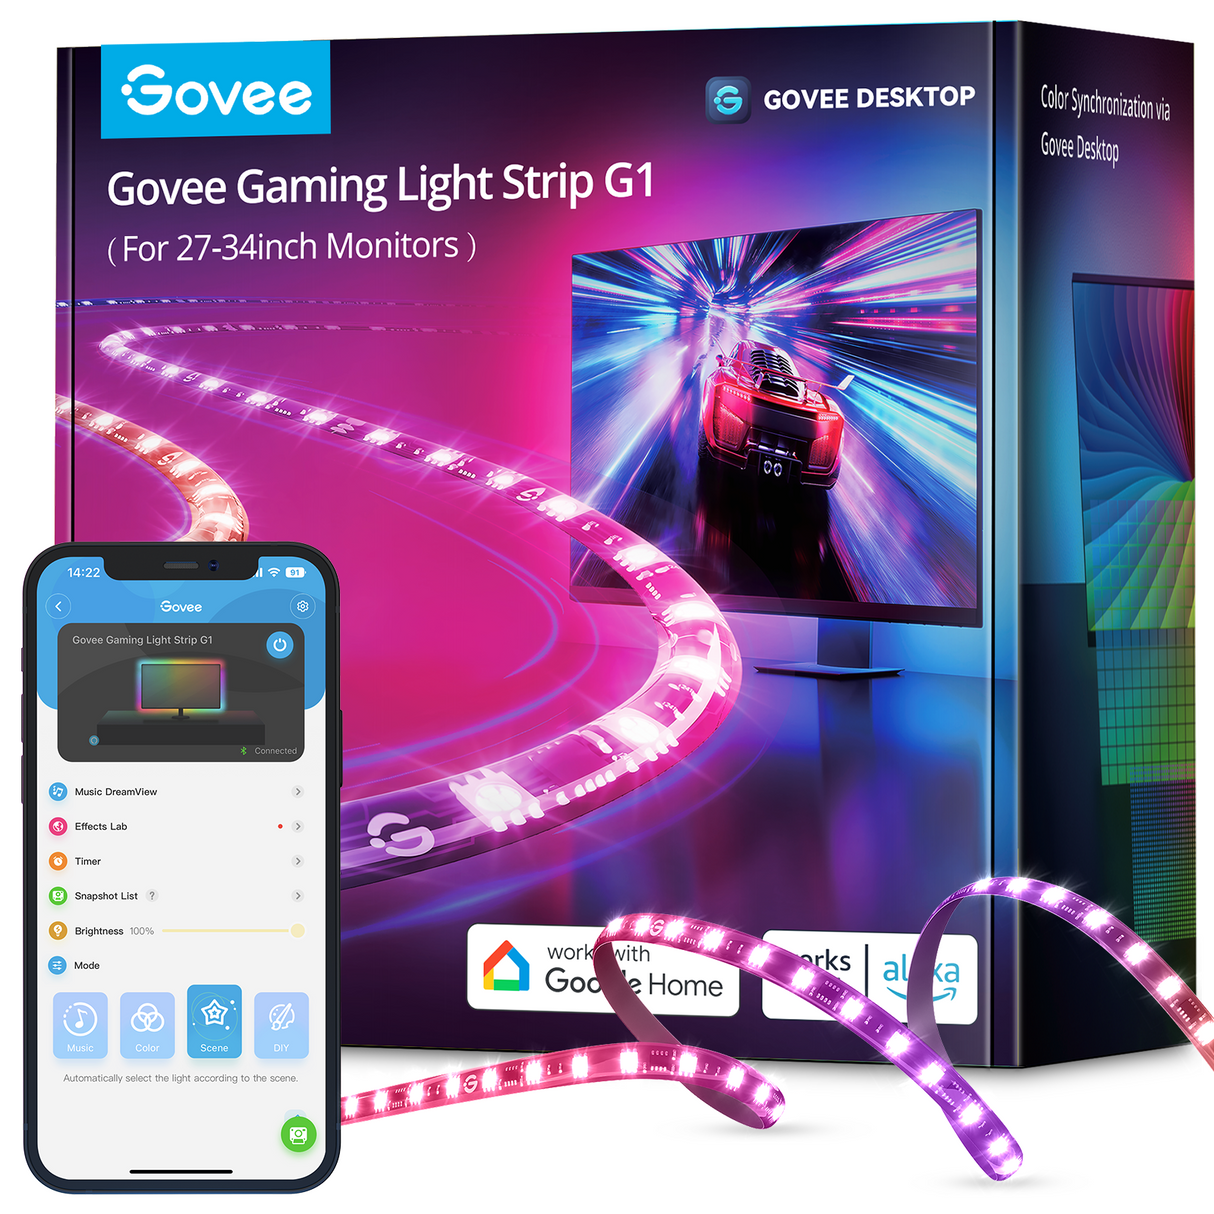 Govee M1 Matter Lightstrip - Works with Apple HomeKit! (Review) 